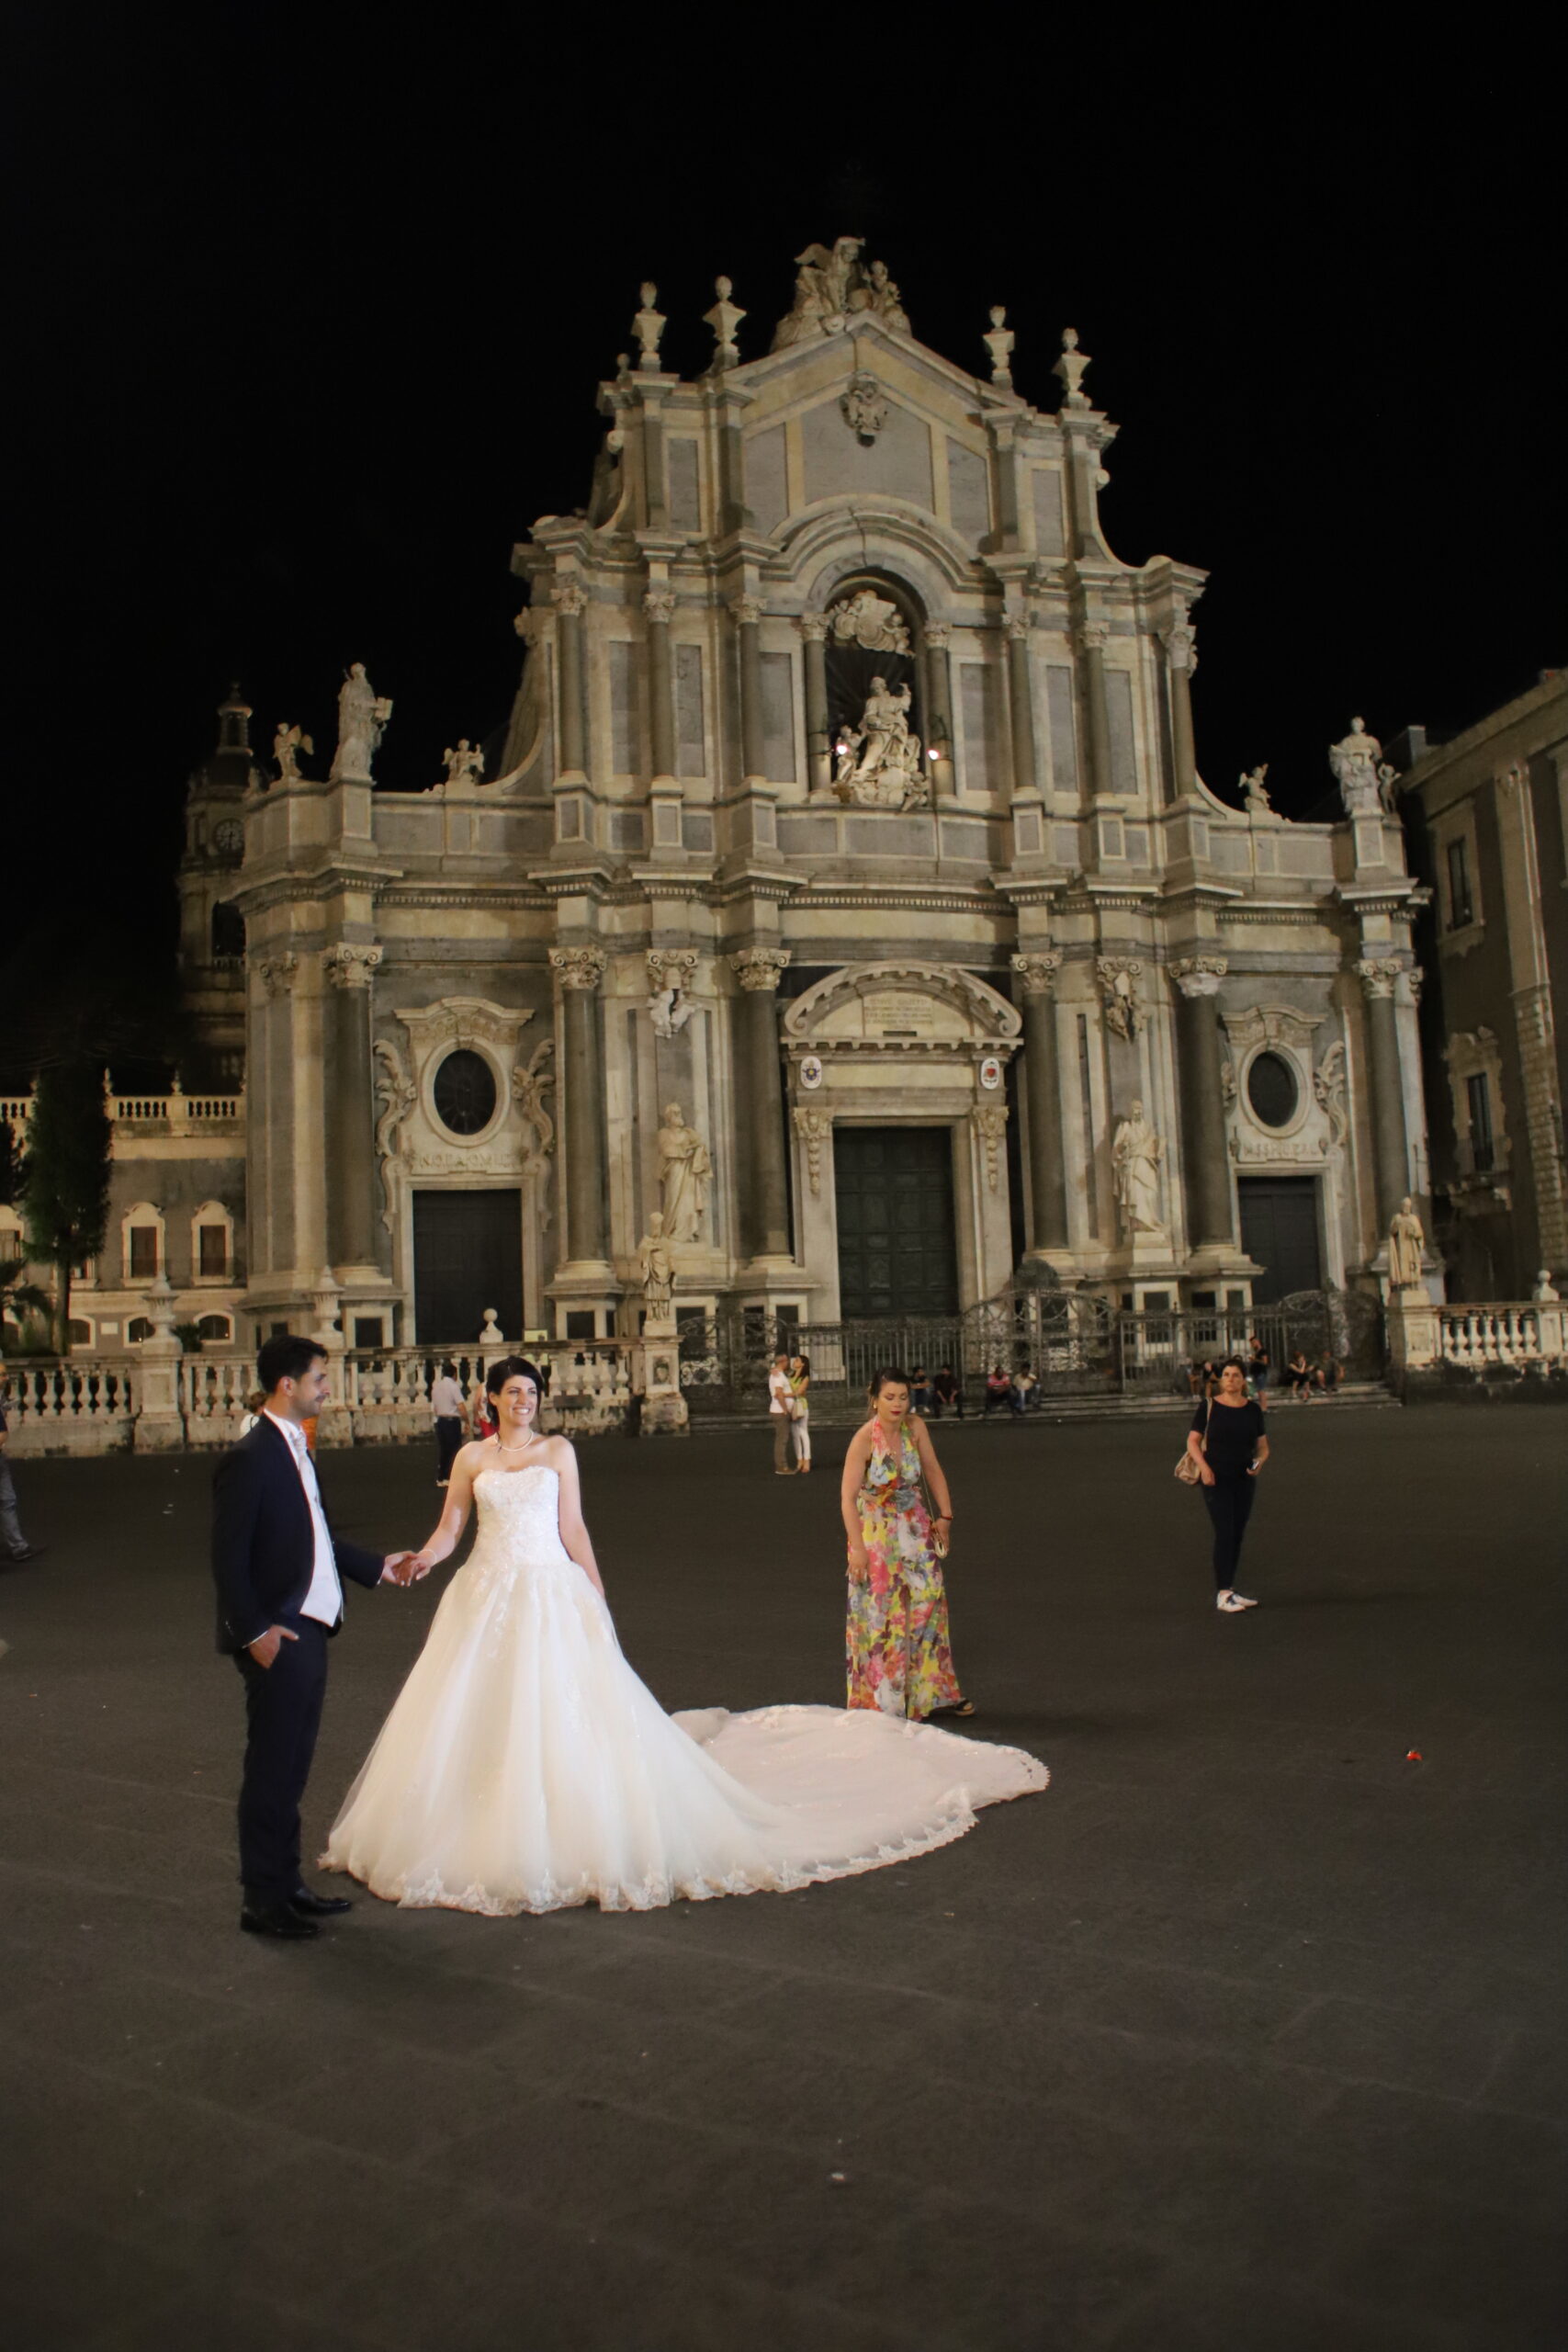 Capturing the Magic of Nighttime Weddings: A Scene in Catania